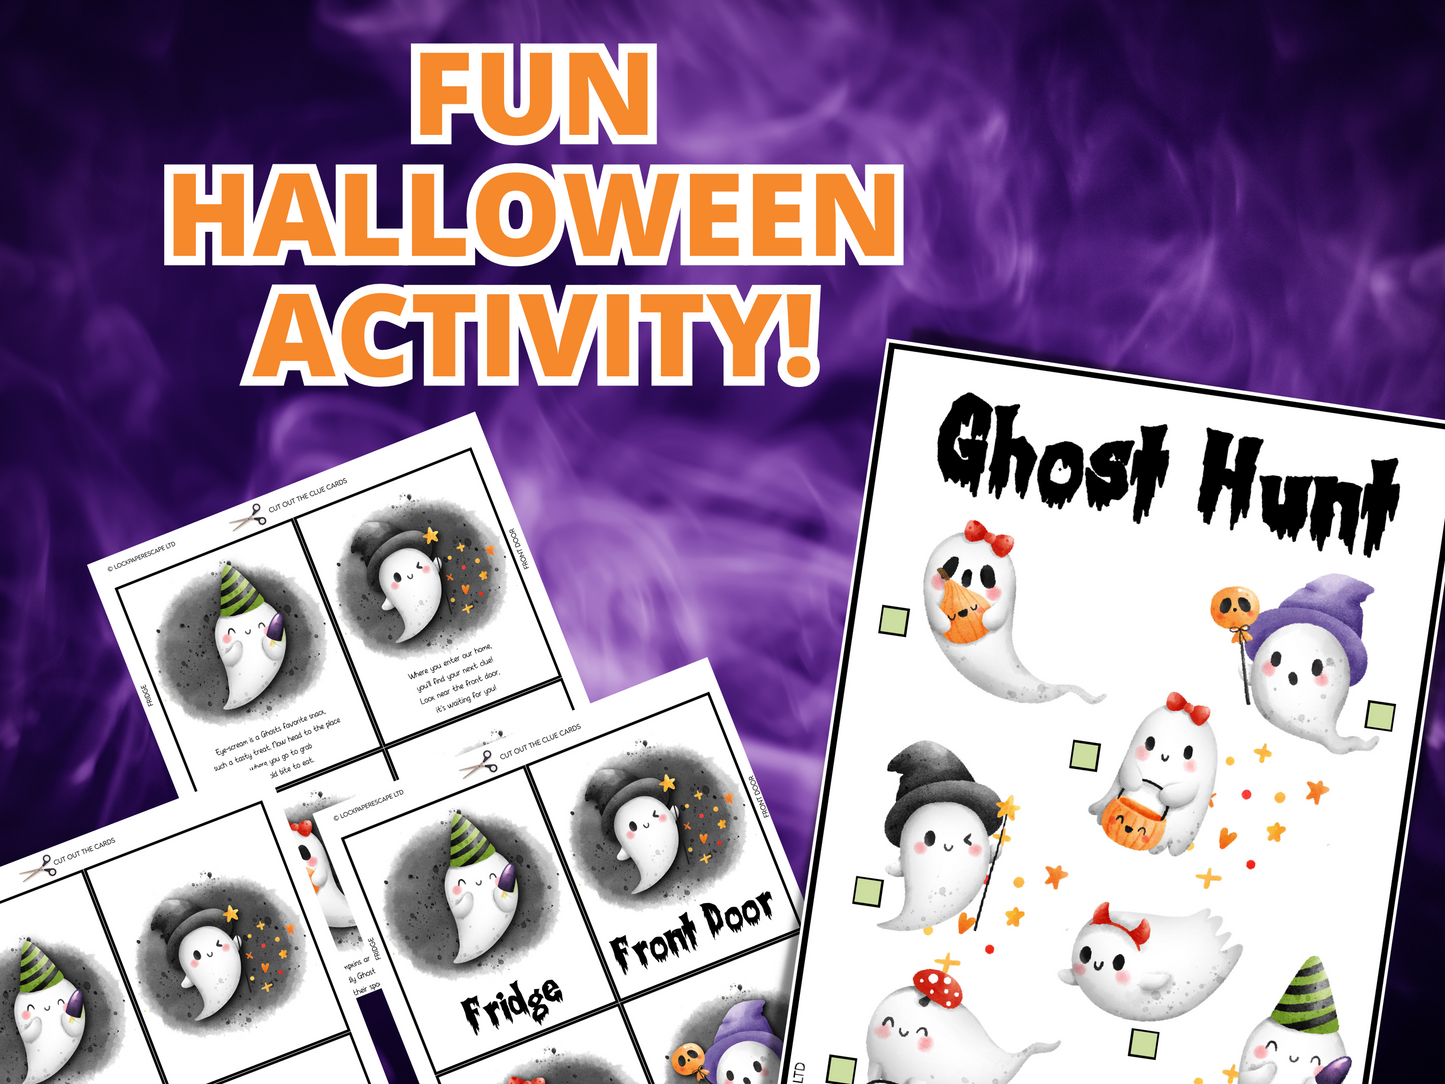 Ghost hunt young kids Halloween activity